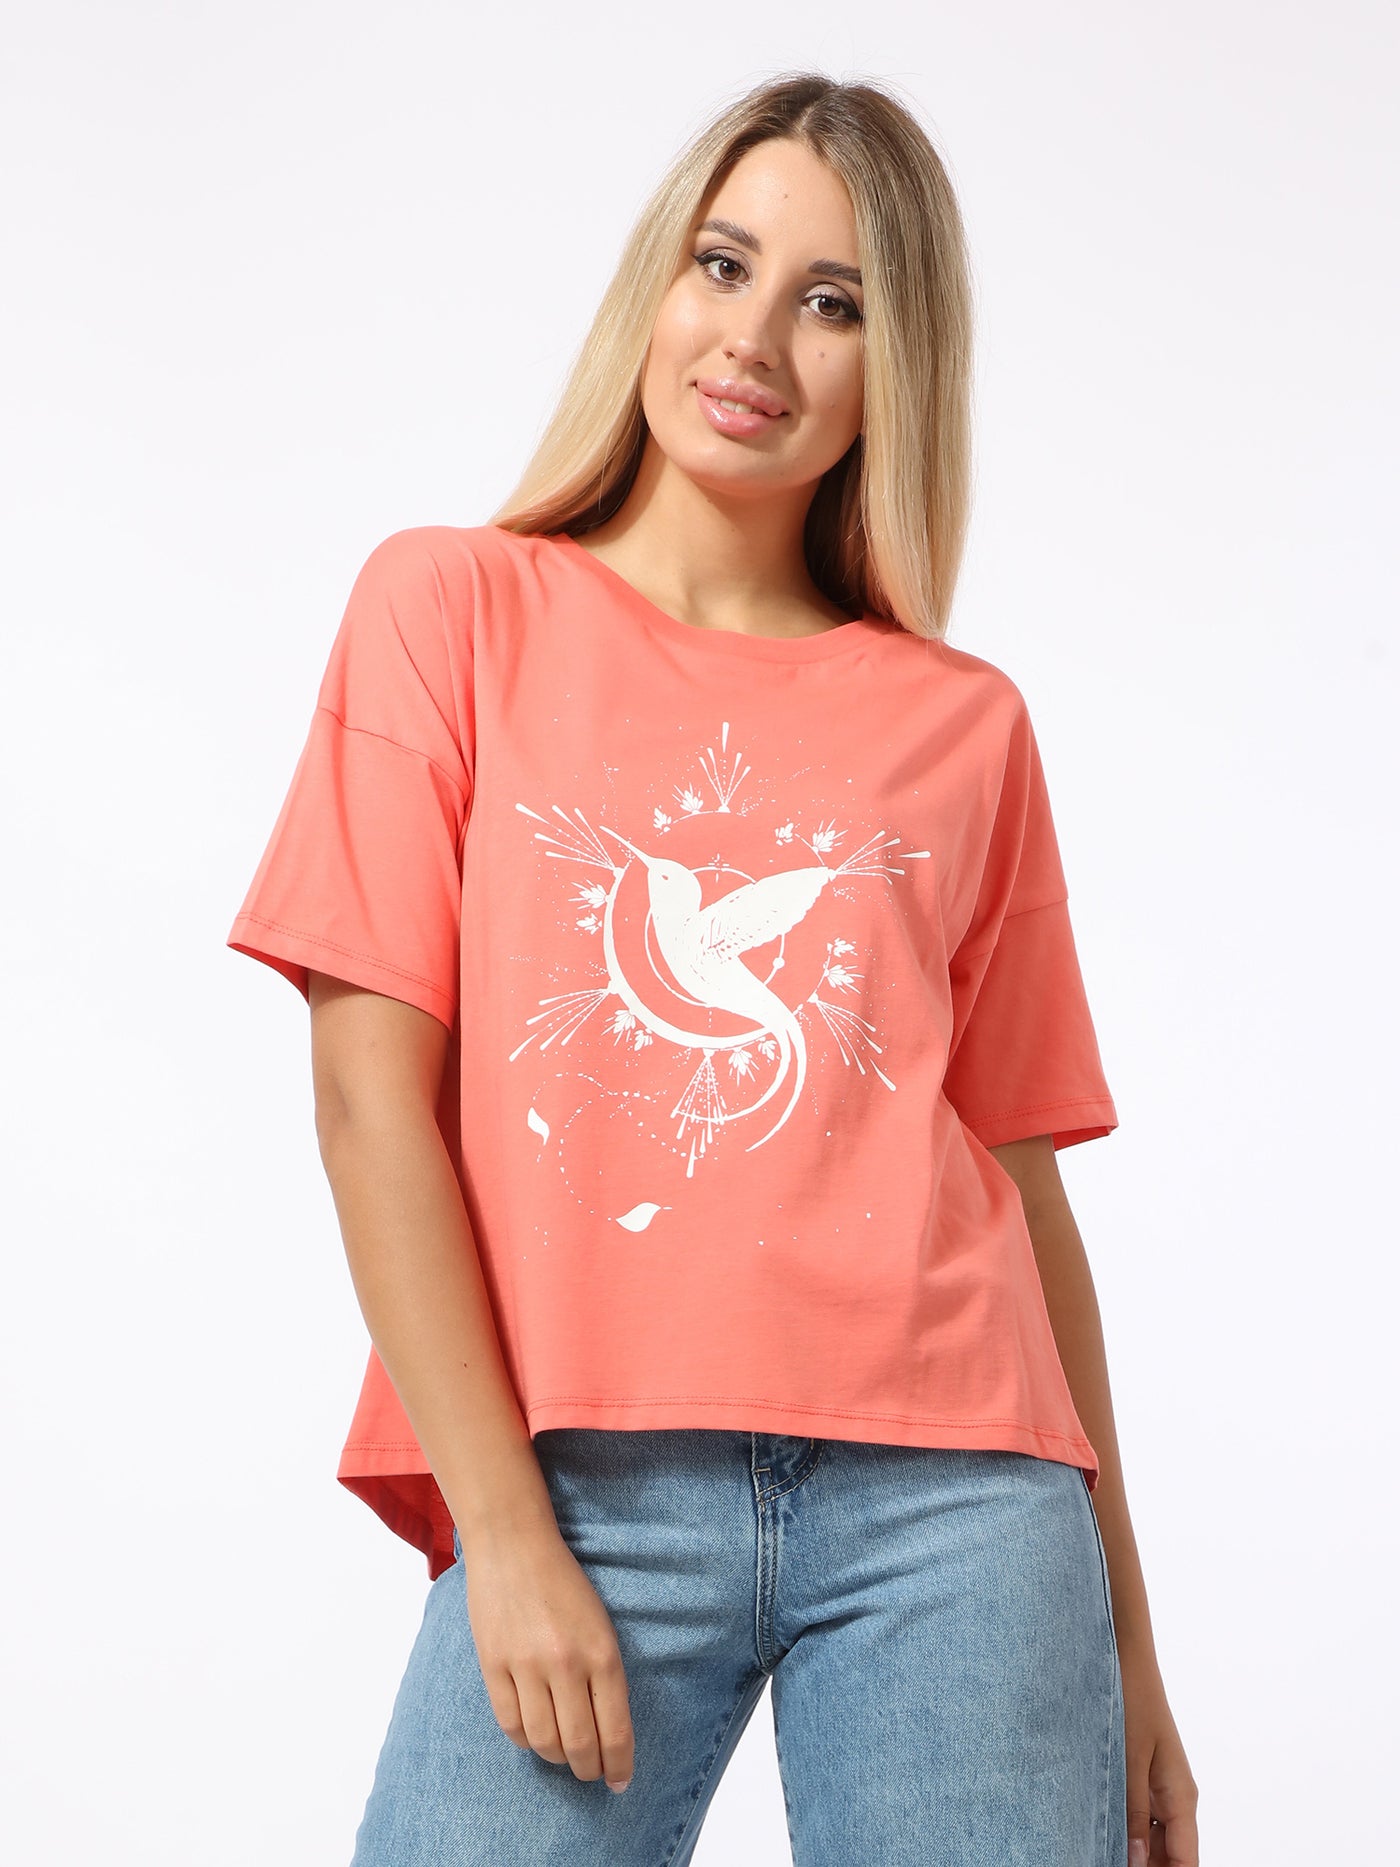 T-shirt - Bird Print - Comfy